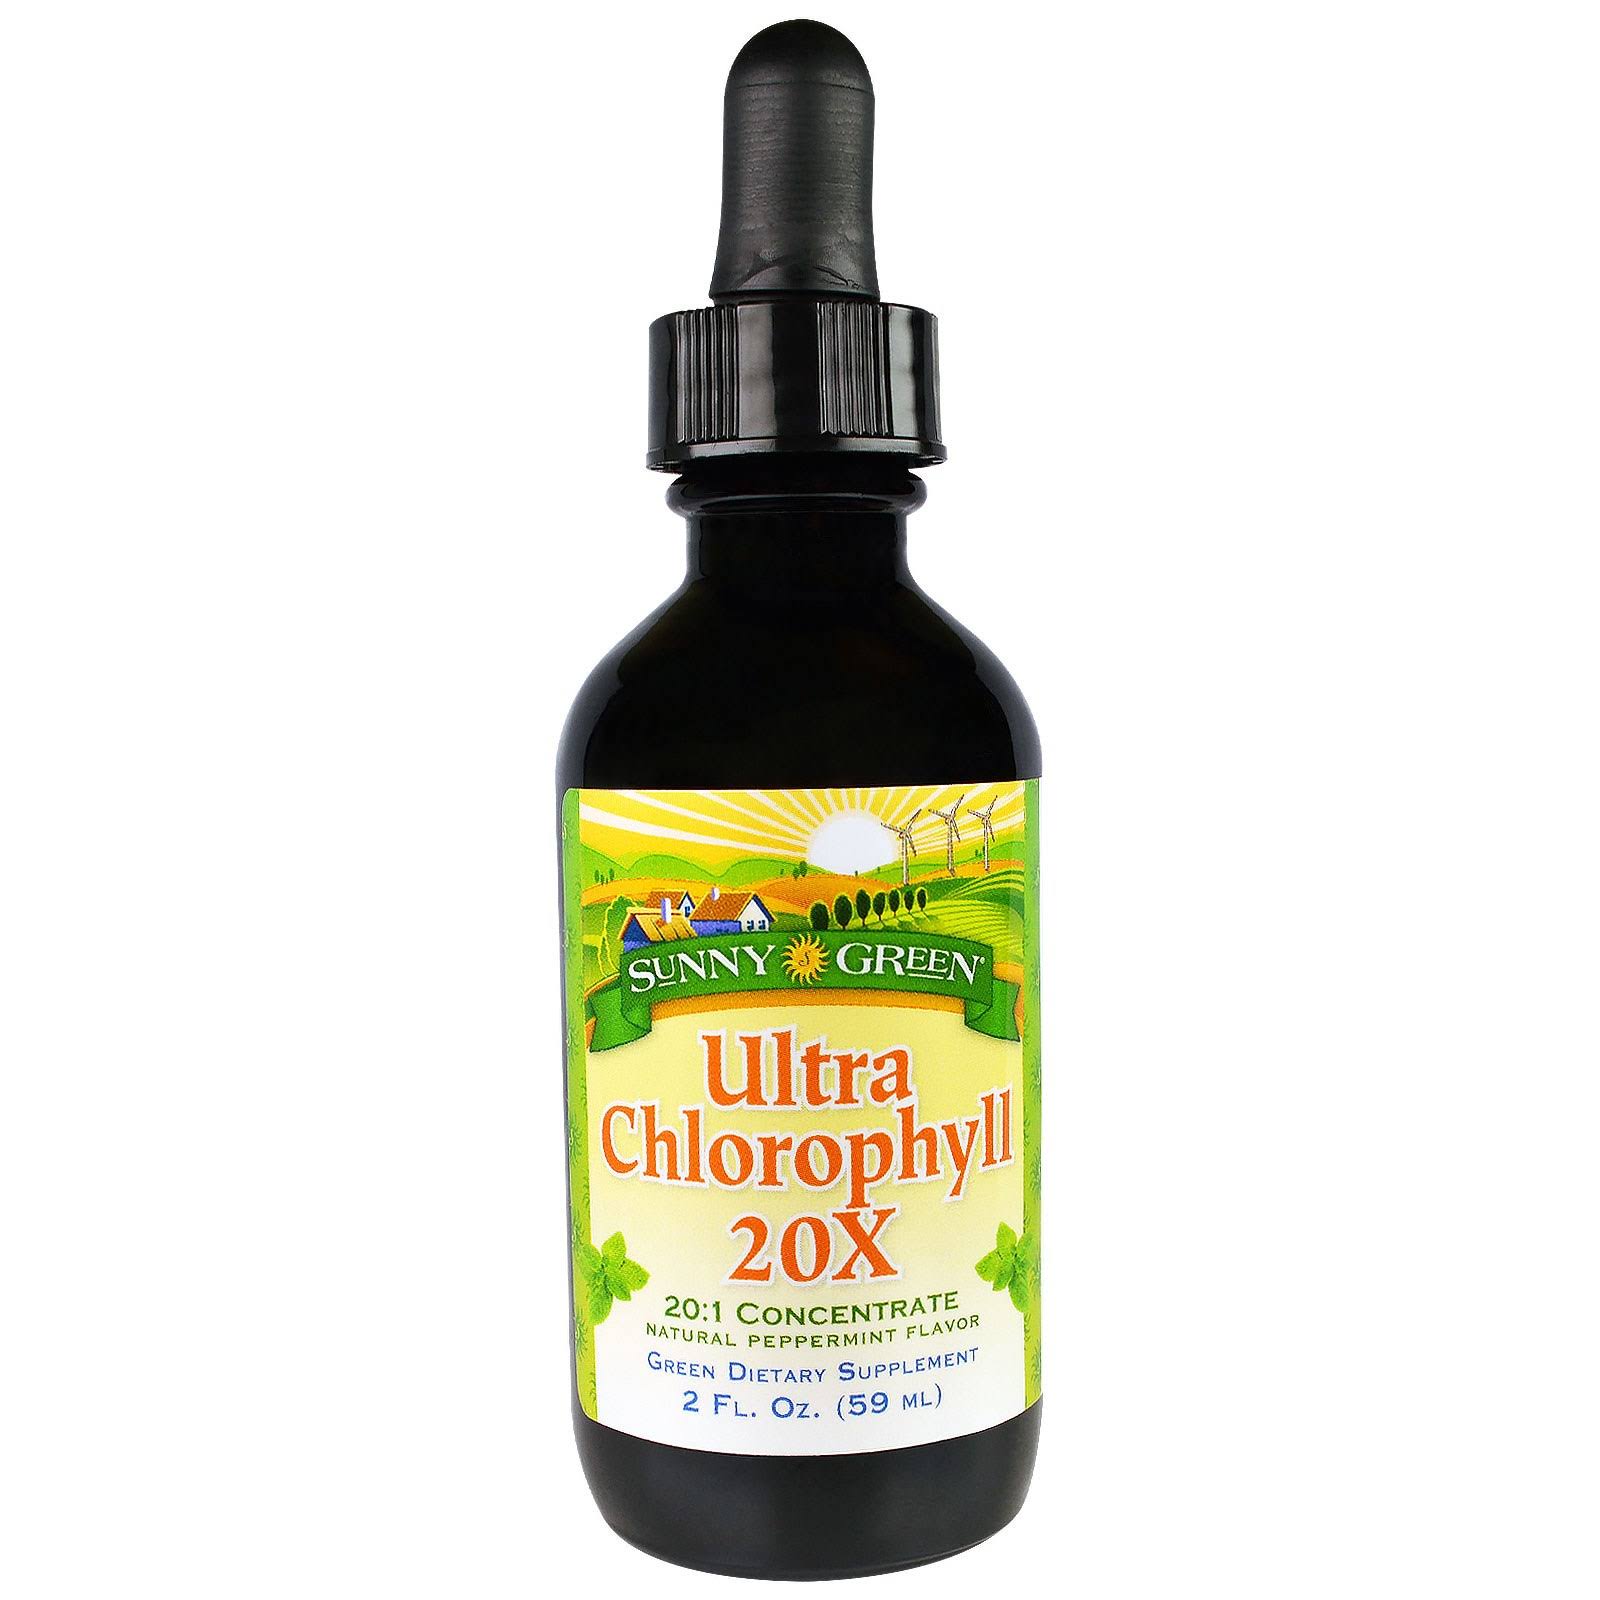 Sunny Green Ultra Chlorophyll 20x Dietary Supplement - Peppermint, 59ml